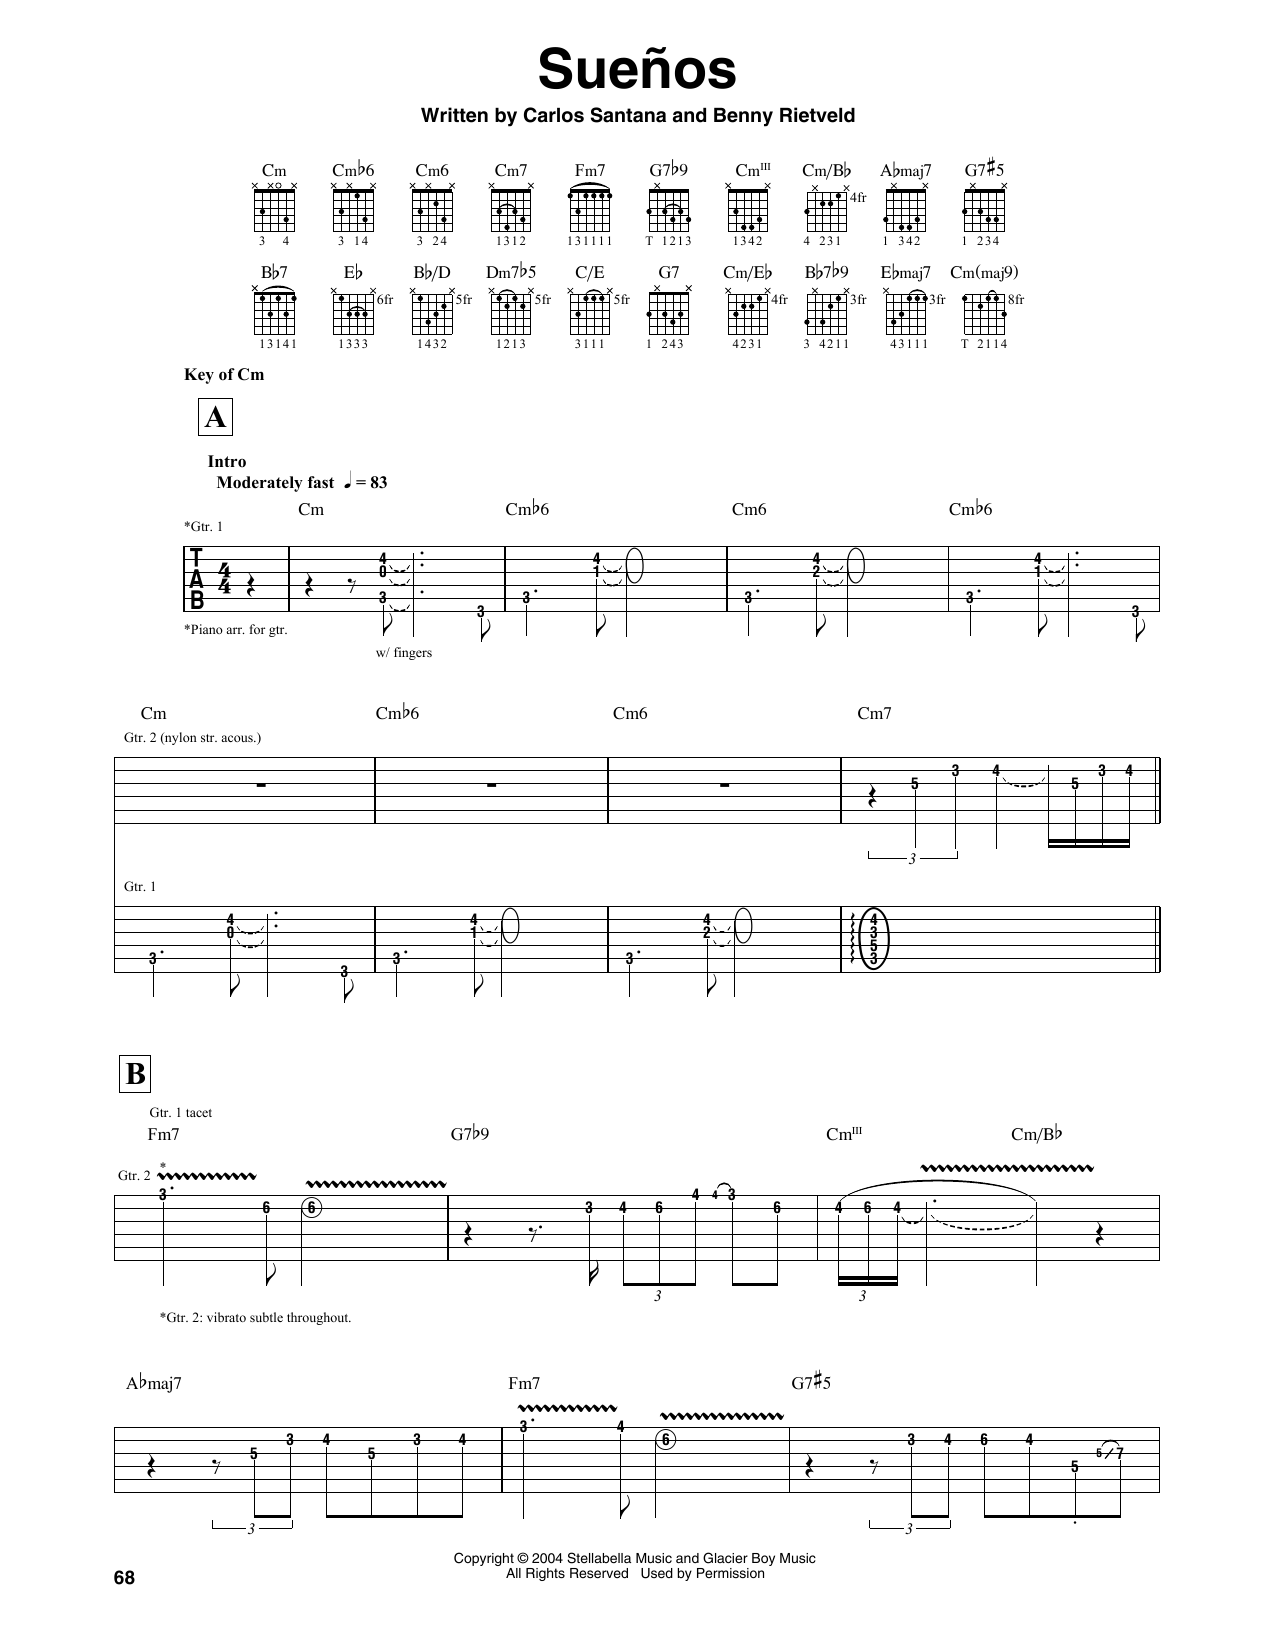 Santana Suenos Sheet Music Notes & Chords for Guitar Tab - Download or Print PDF